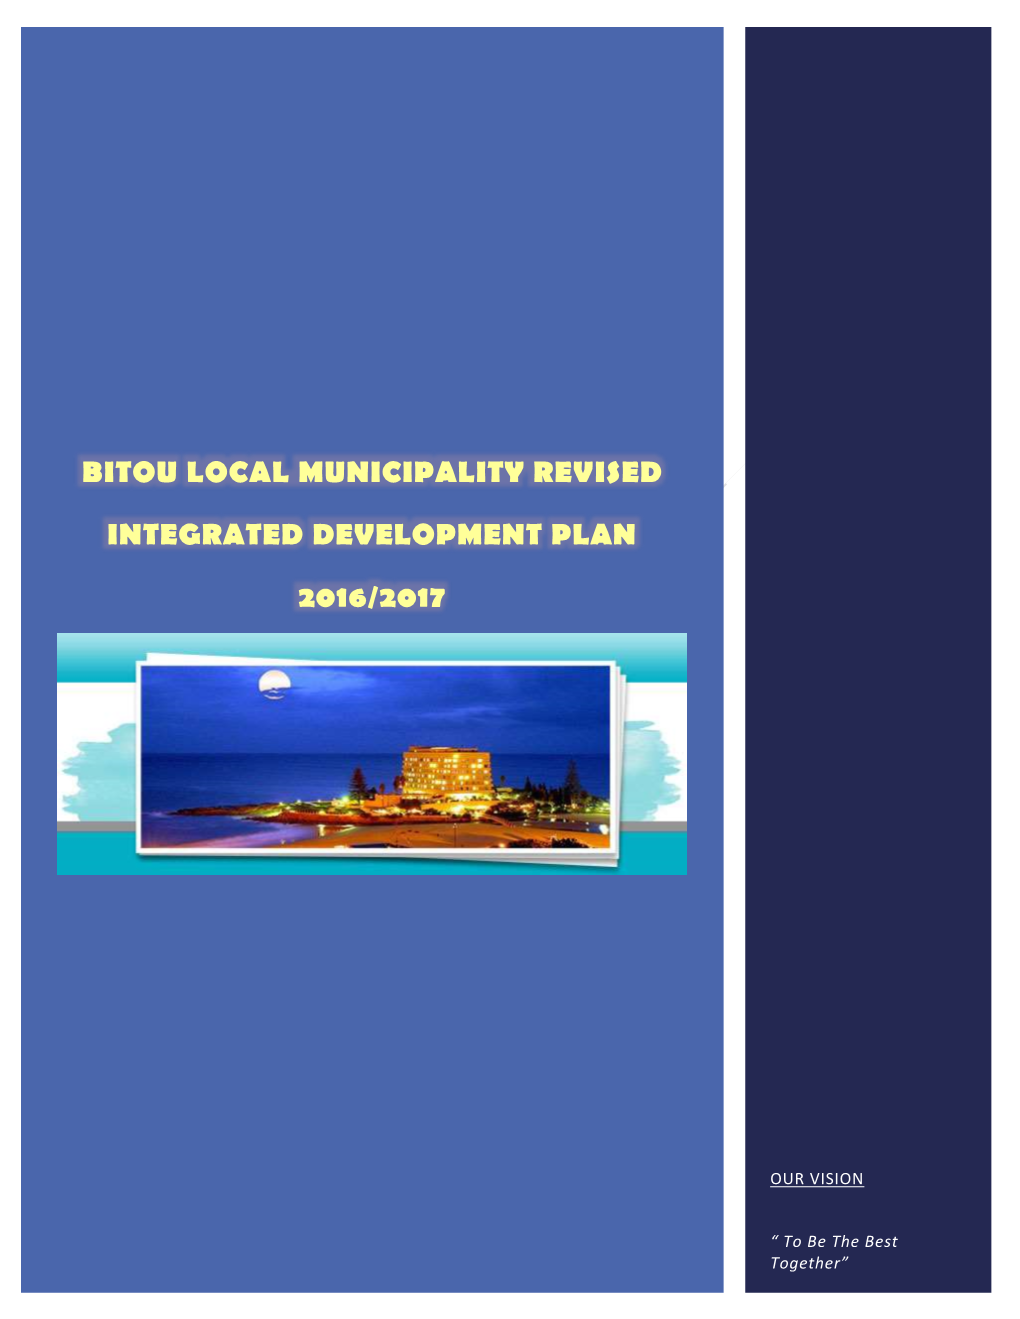 Bitou Local Municipality Revised Integrated Development Plan 2016/2017